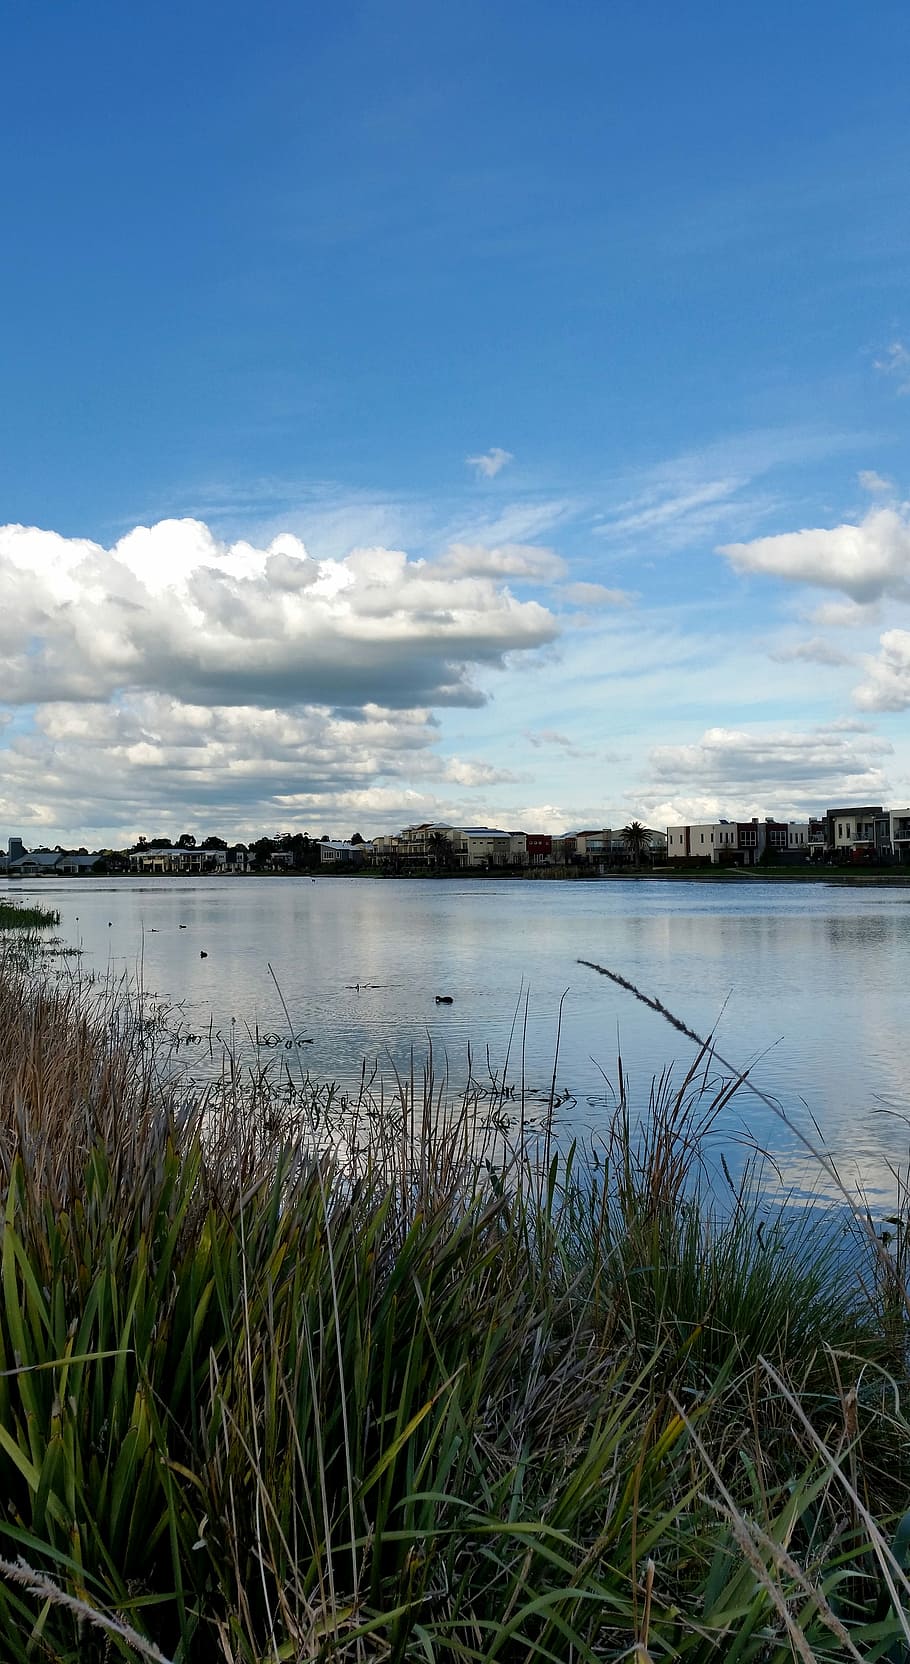 Urban, Suburban, Lakeside, Lake, Housing, sky, clouds, reflections